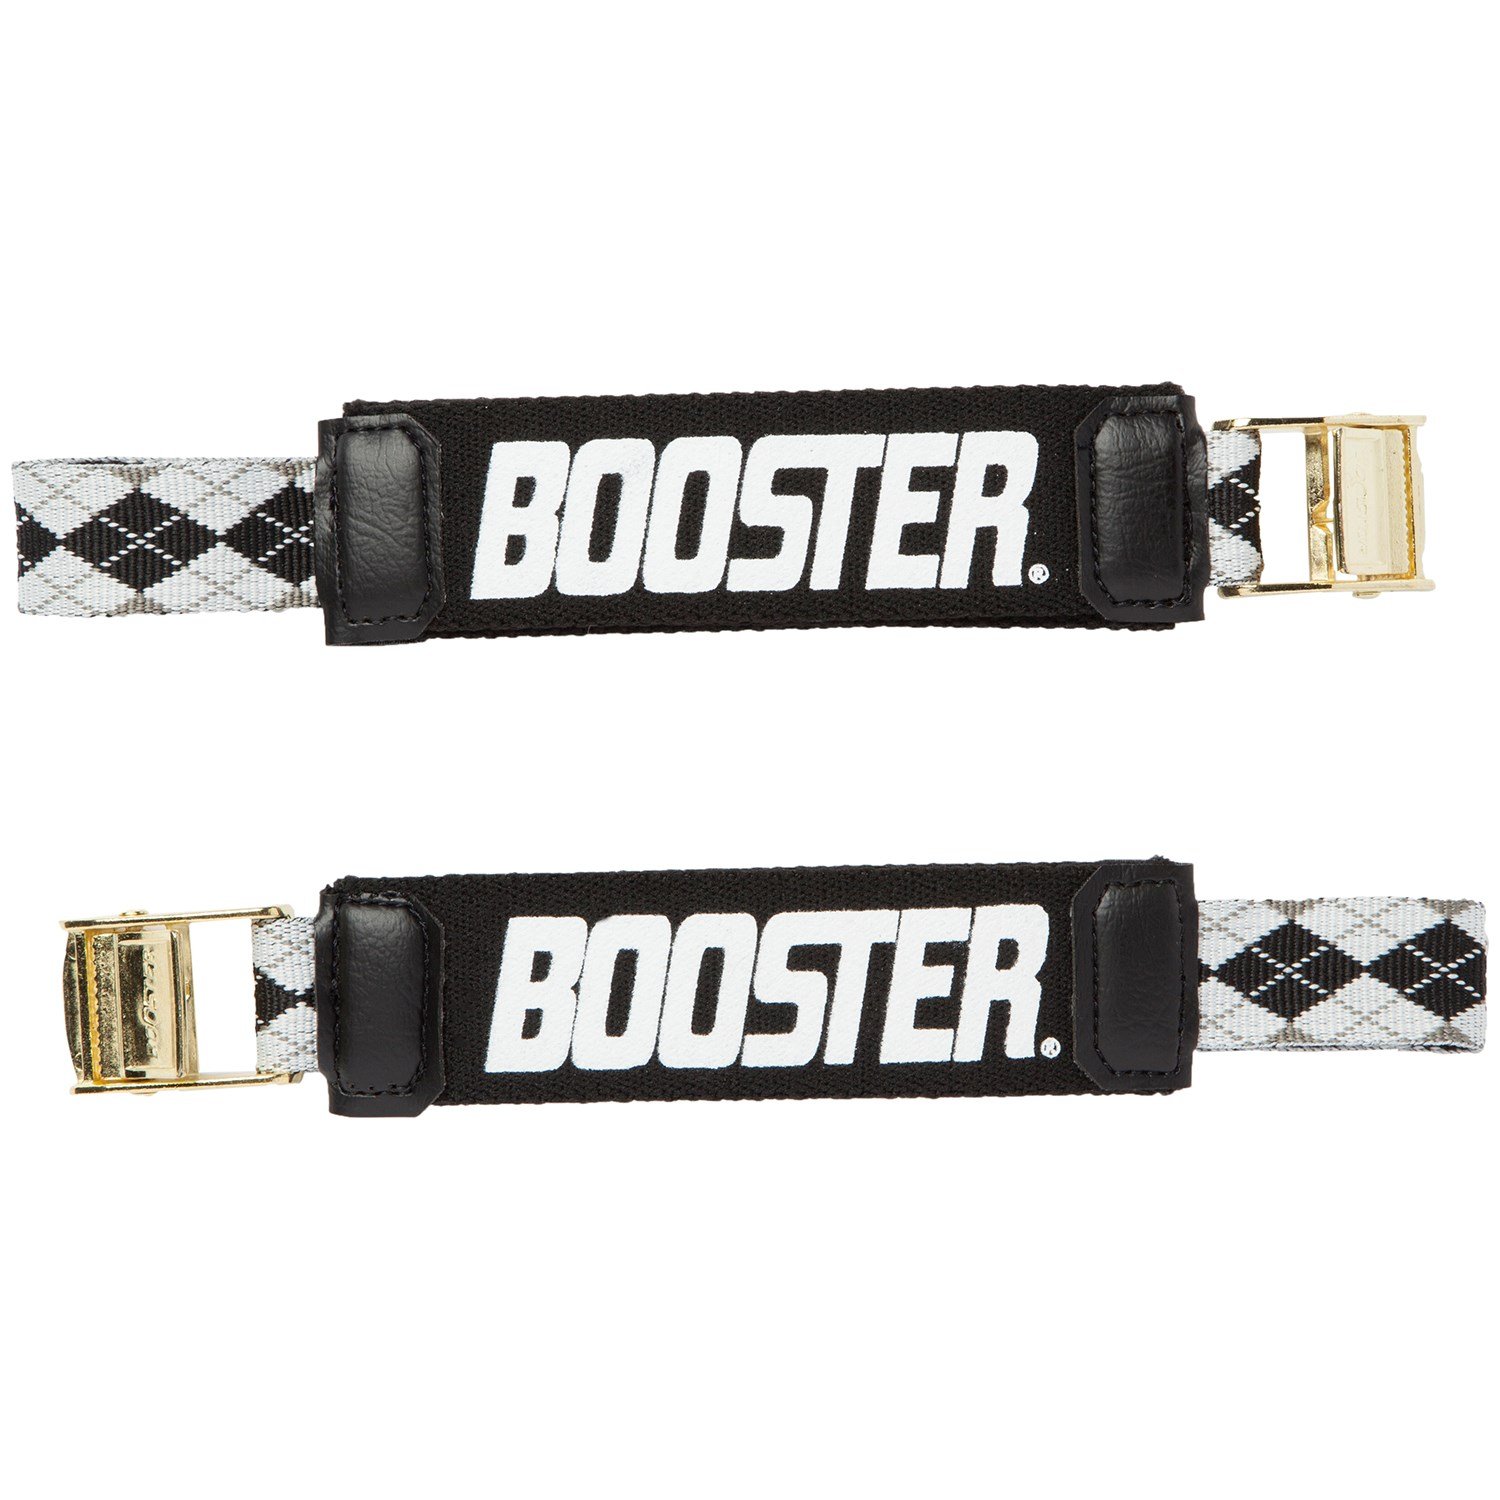 Double booster strap - Gear Talk 